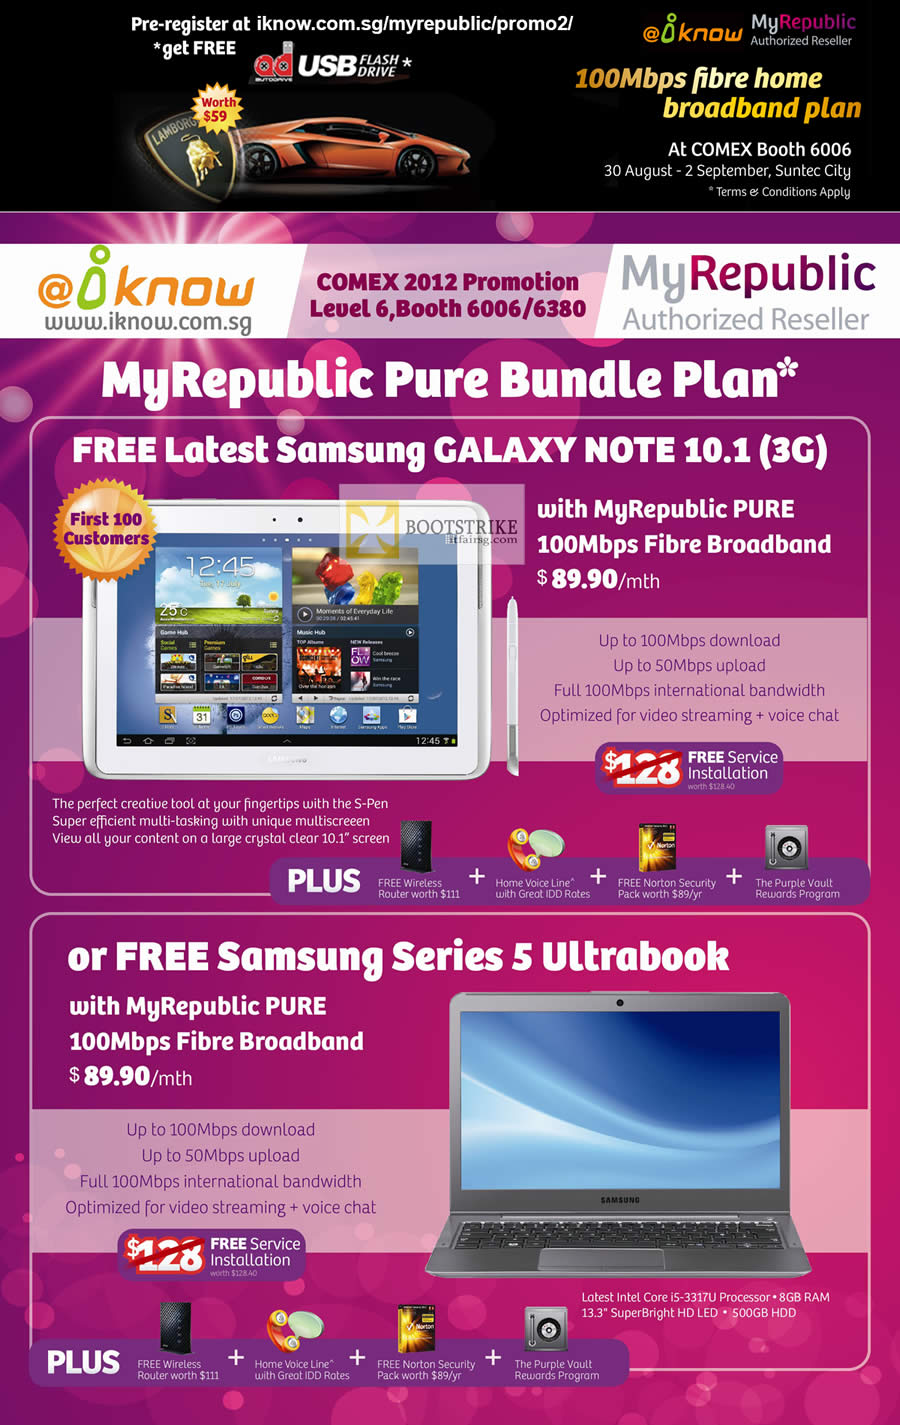 COMEX 2012 price list image brochure of IKnow MyRepublic 100Mbps Pure Bundle Fibre Broadband Free Samsung Galaxy Note 10.1, Samsung Series 5 Ultrabook